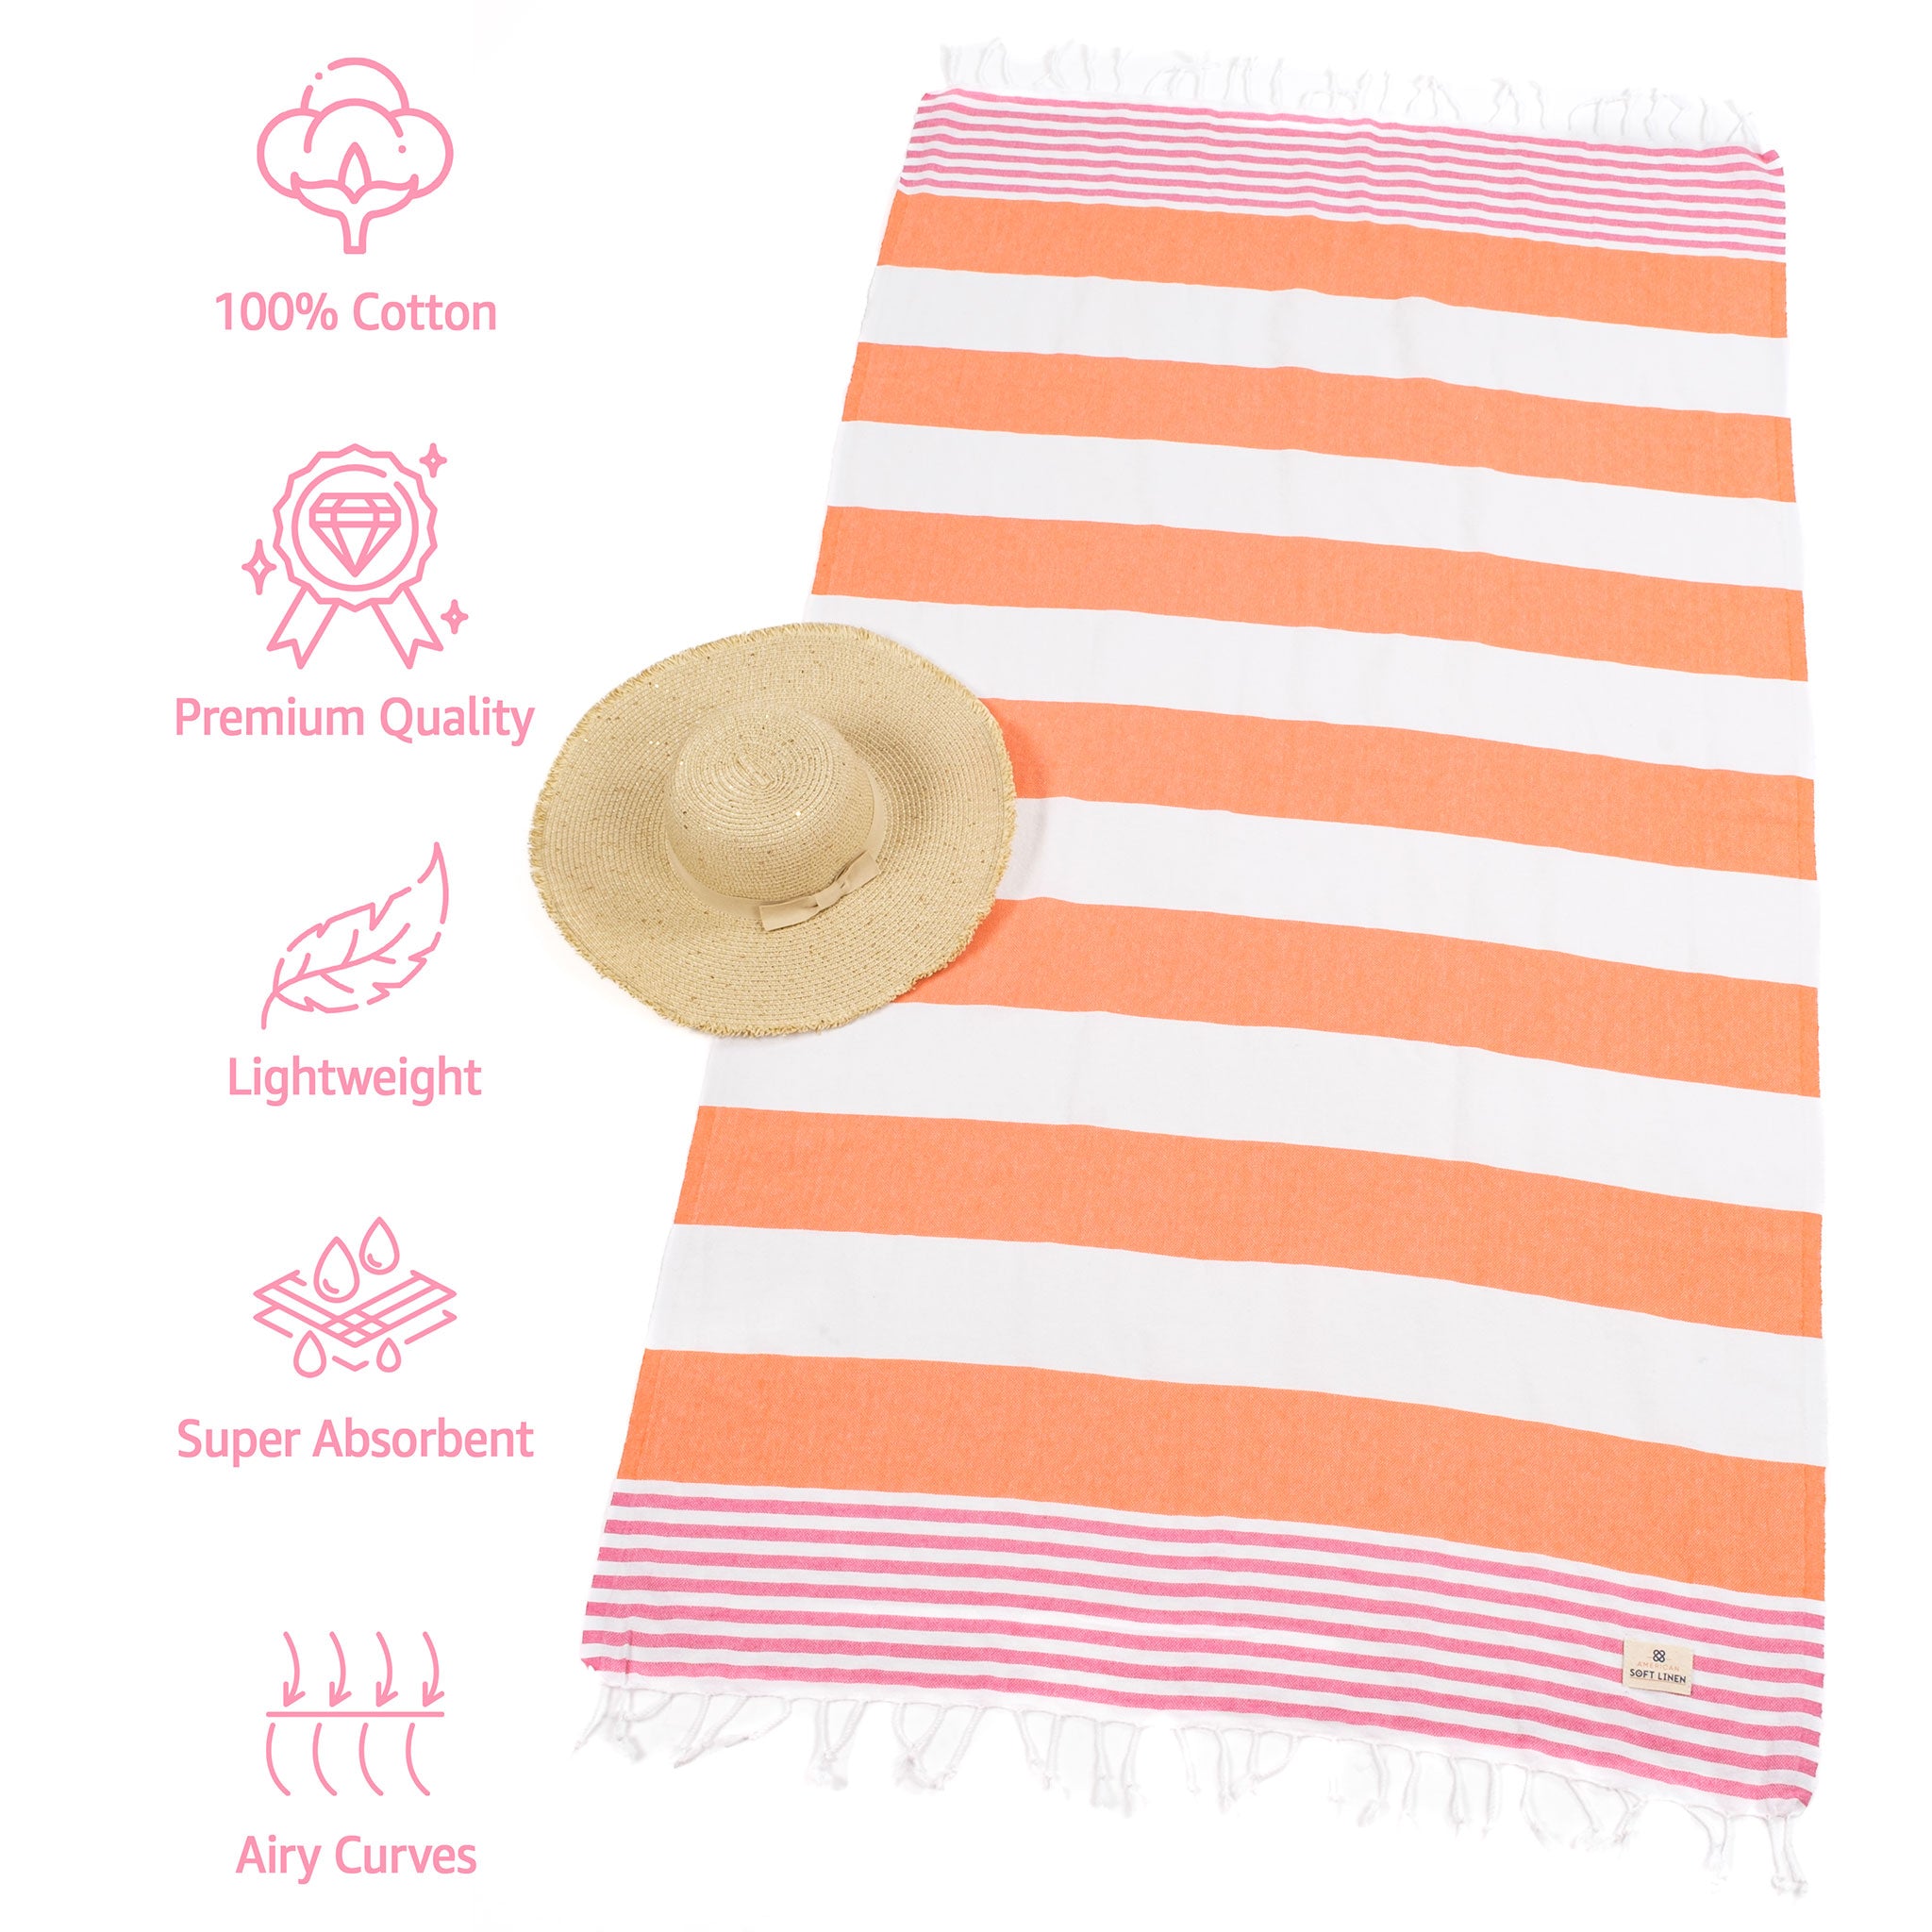 American Soft Linen - 100% Cotton Turkish Peshtemal Towels 40x70 Inches - Pink - 3